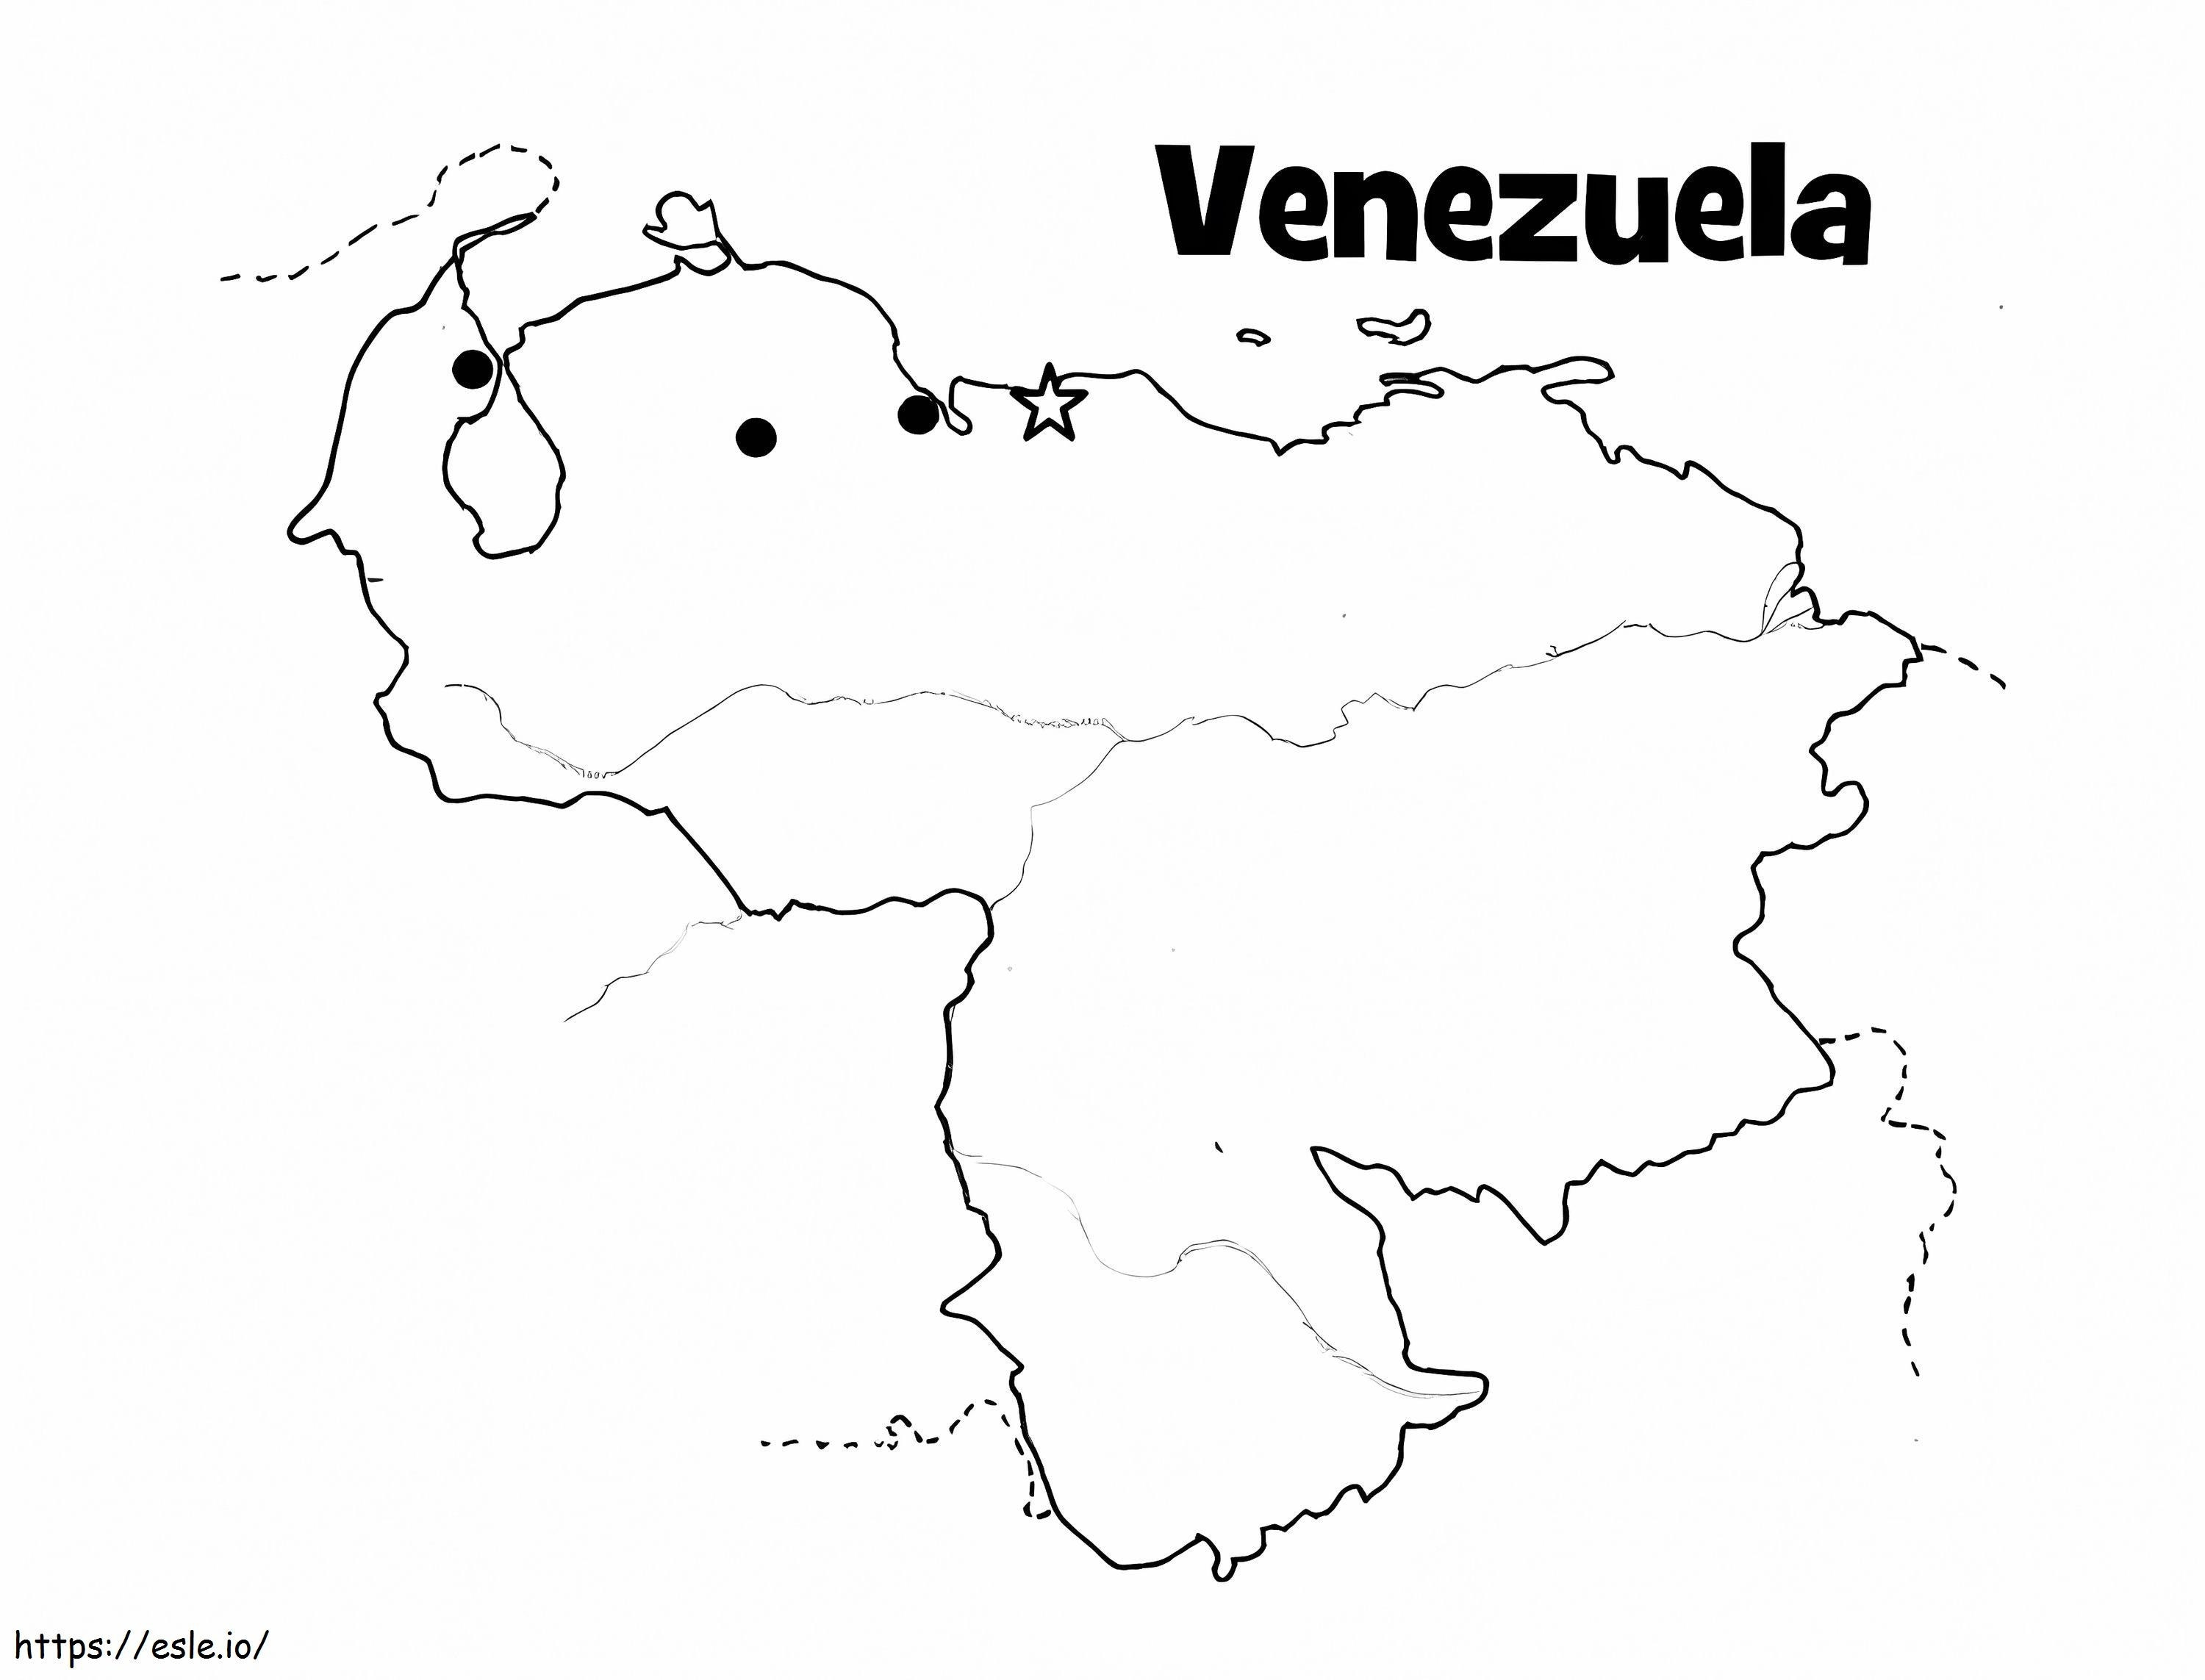 Venezuela Map Coloring Image coloring page